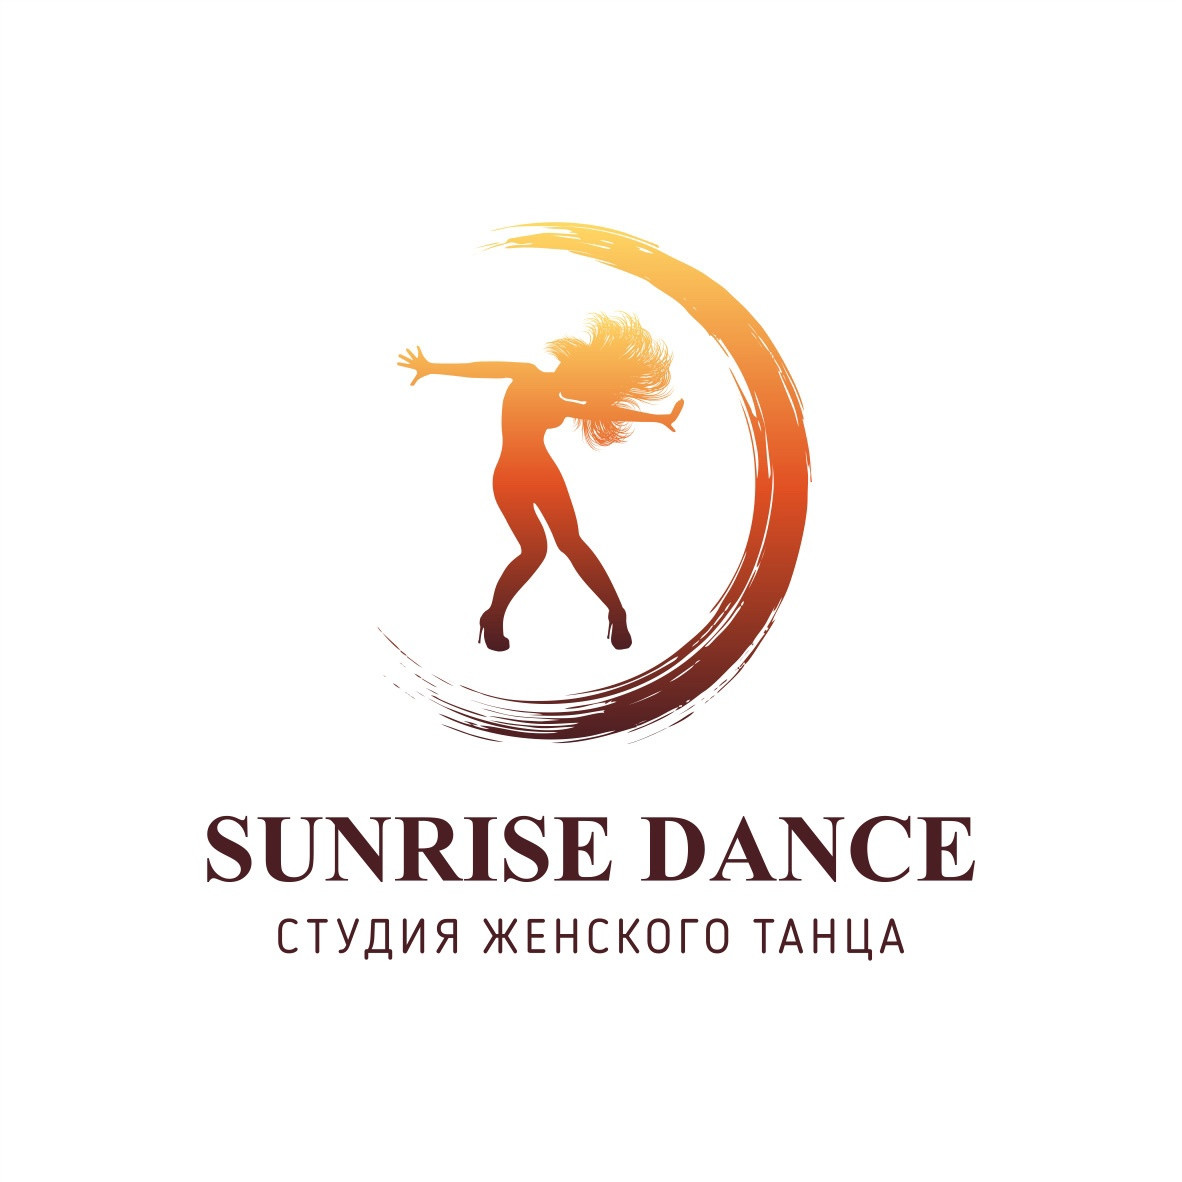 Студия женского танца Sunrise dance